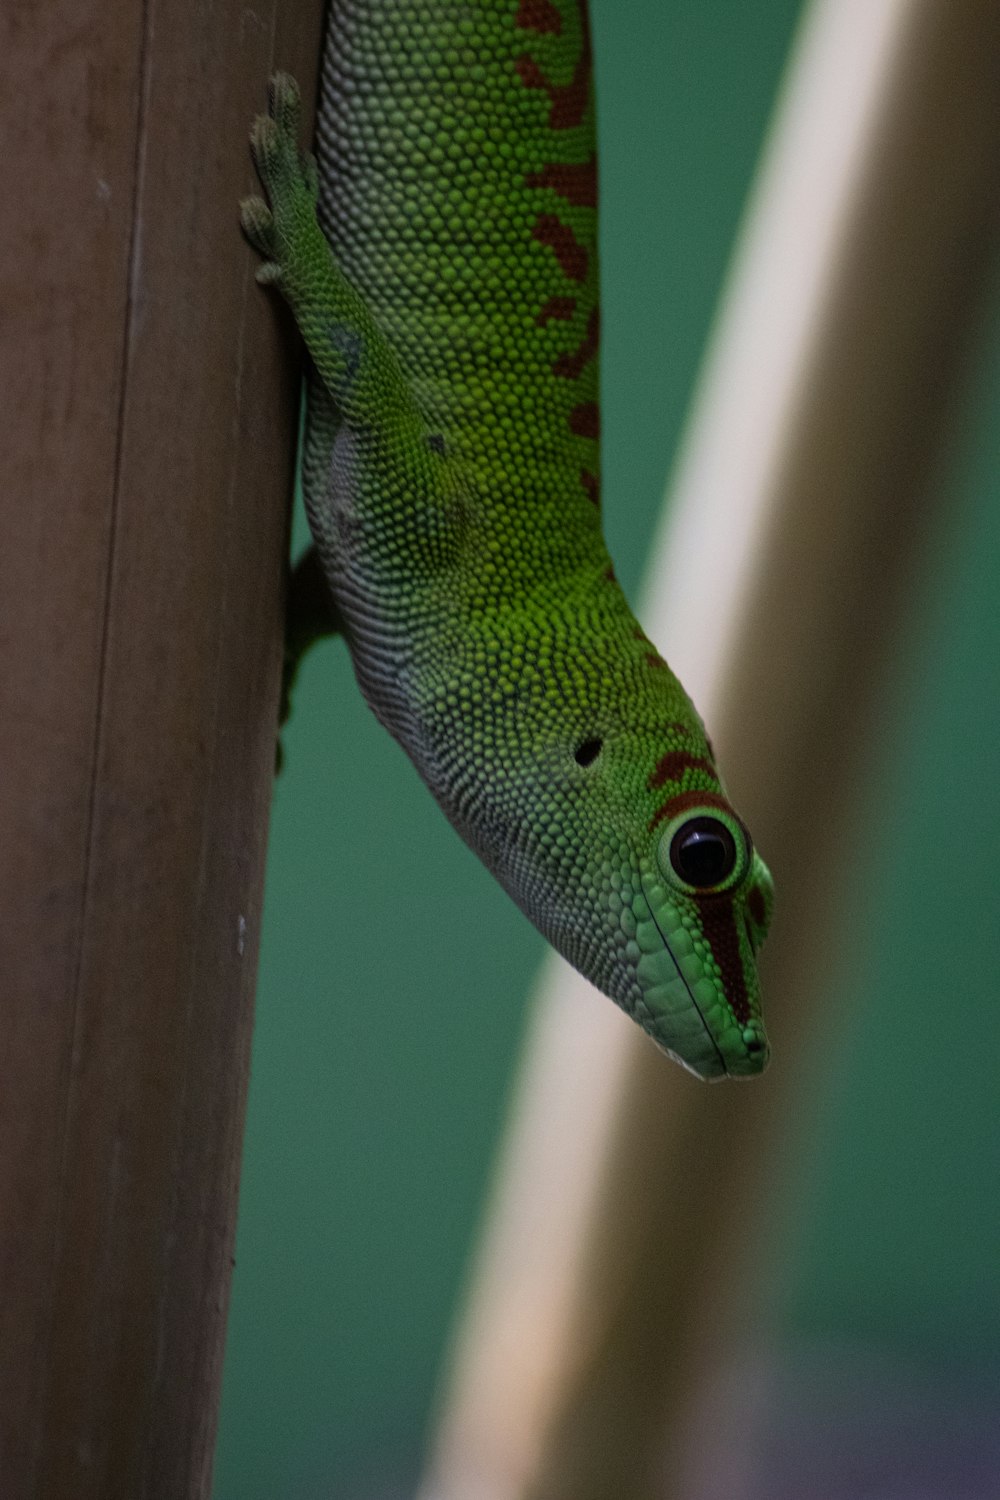 lagarto verde e marrom na vara de bambu marrom